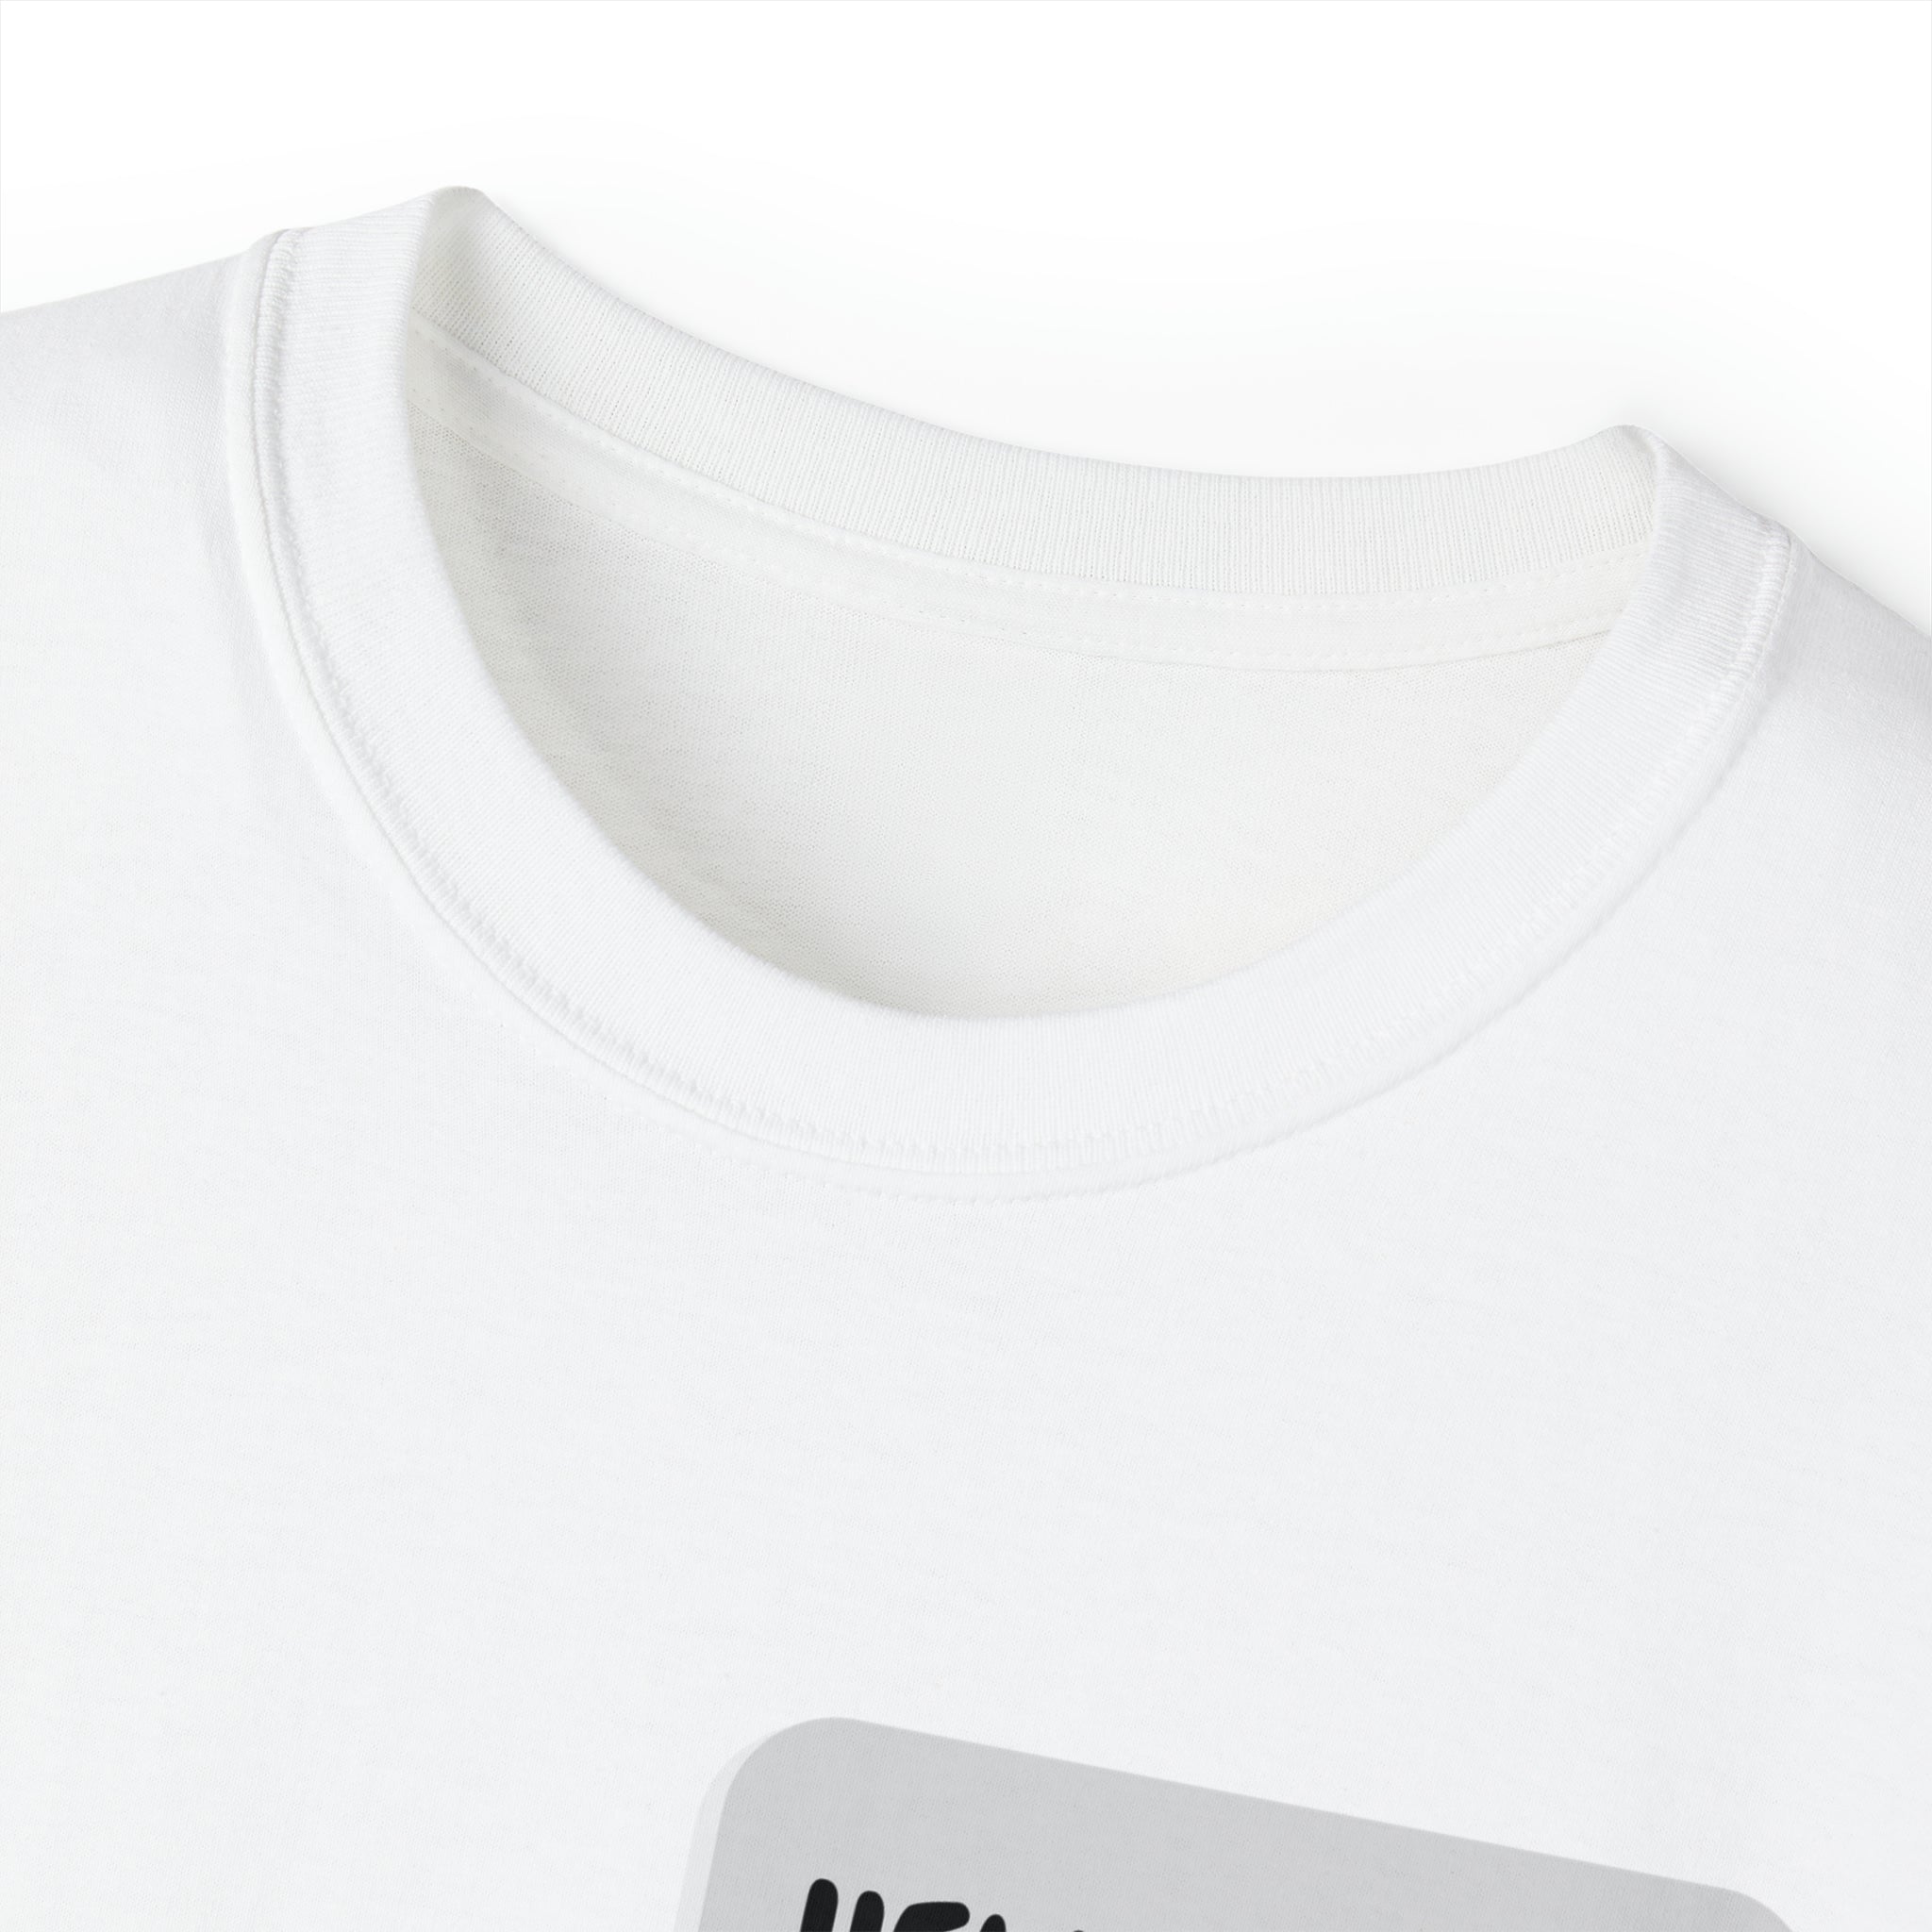 Hello World - Unisex Shirt